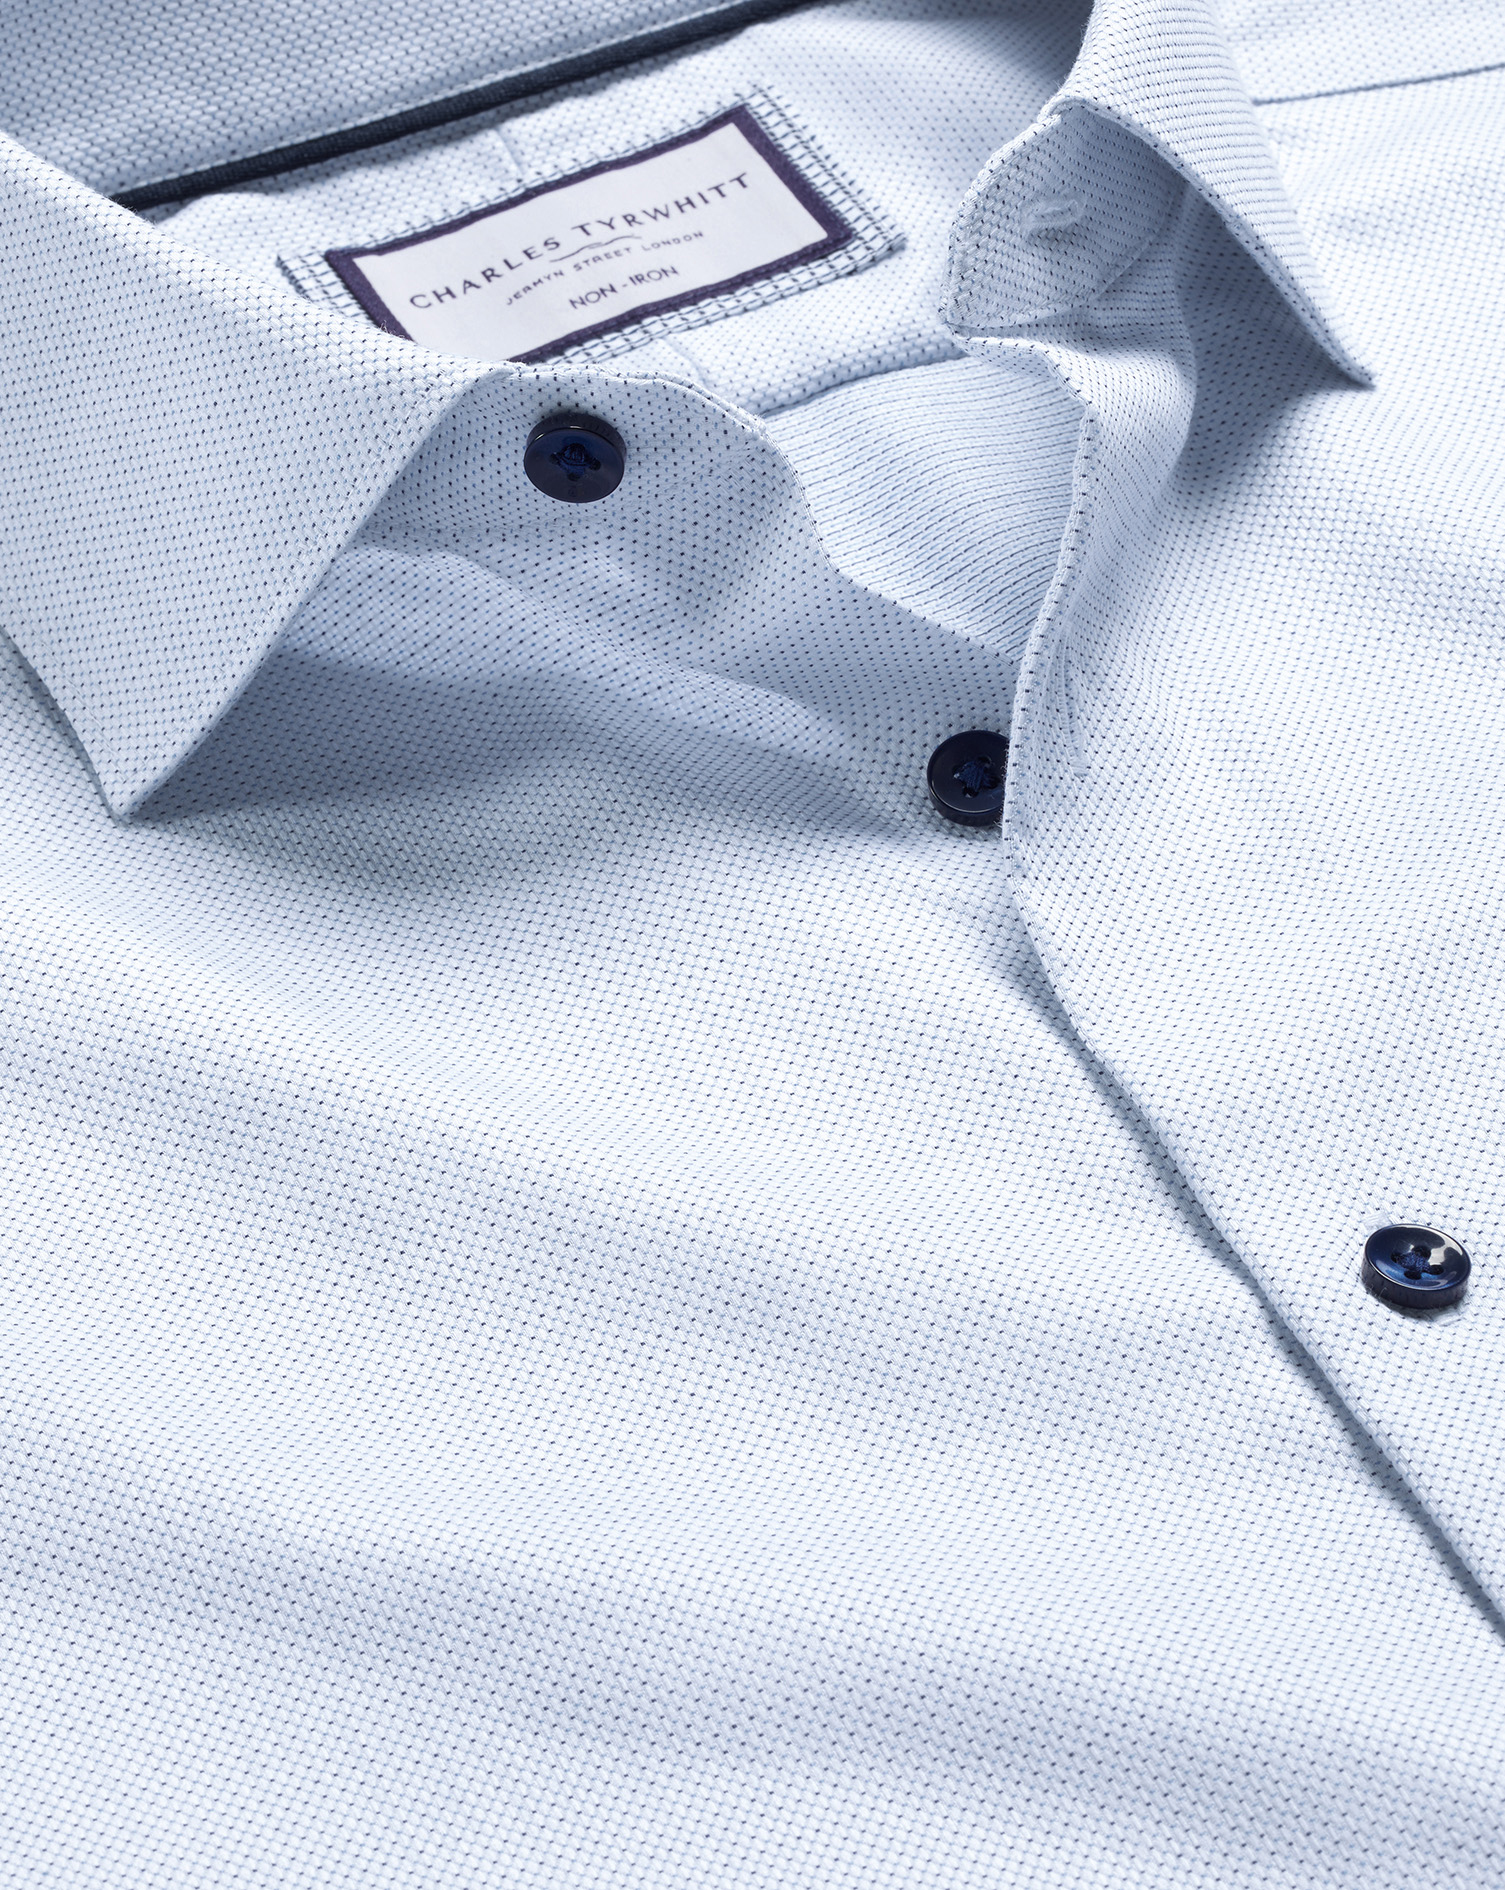 | Stretch Charles Tyrwhitt Shirt Non-Iron Dot Texture - White